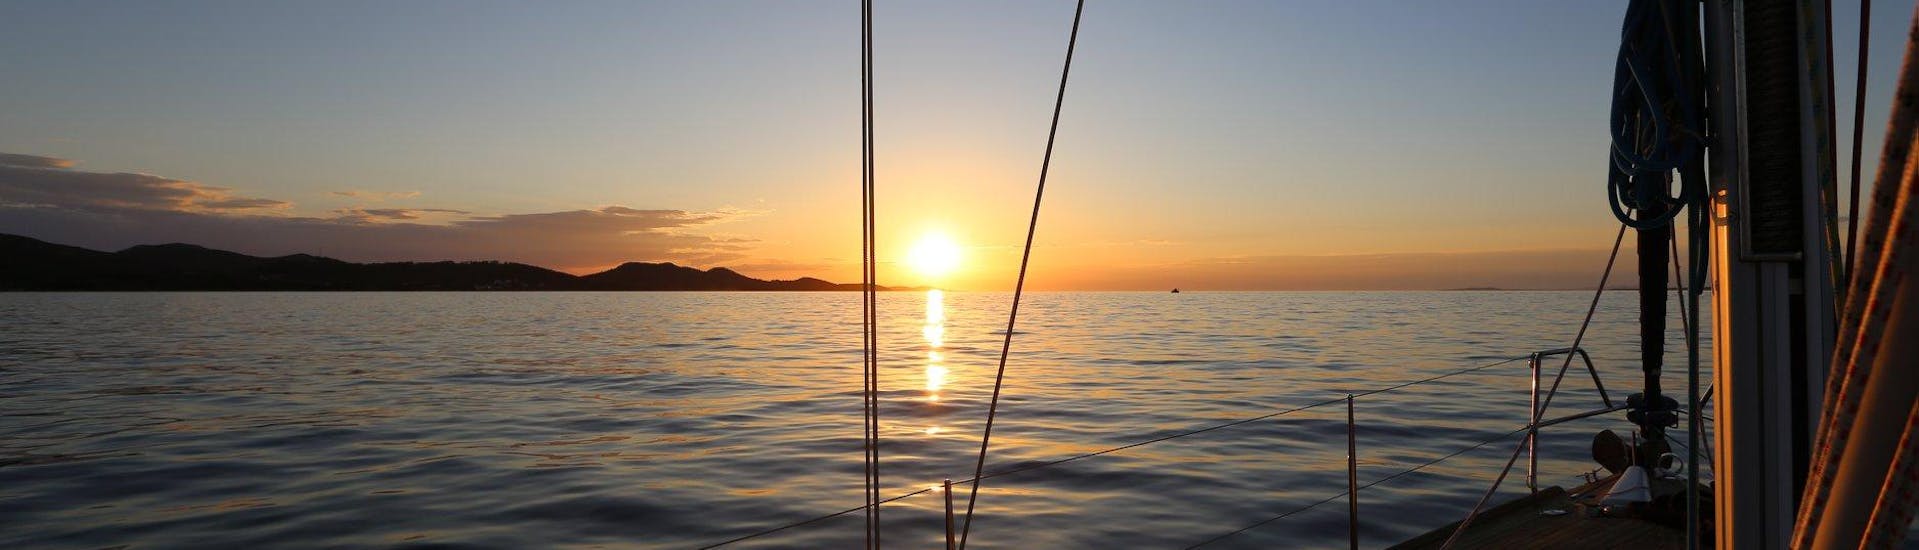 Gita in barca a vela da Mali Lošinj al tramonto.